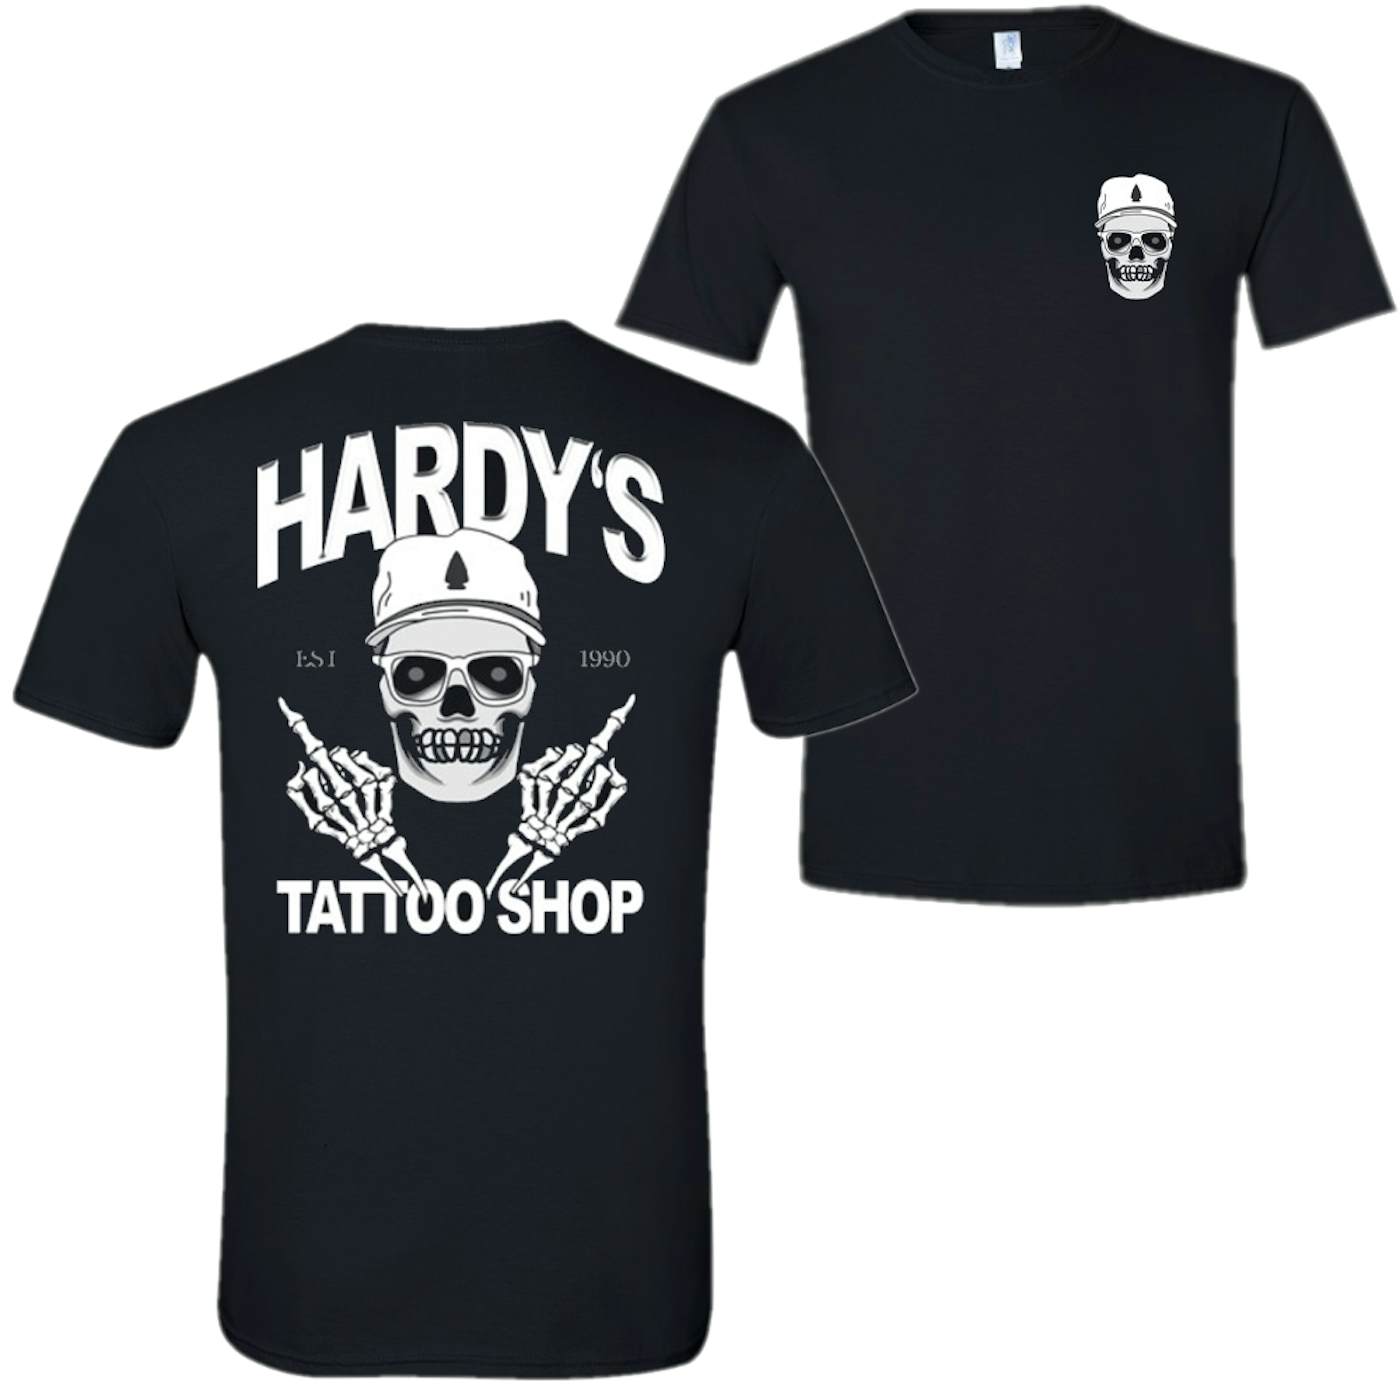 HARDY Tattoo Shop Tee